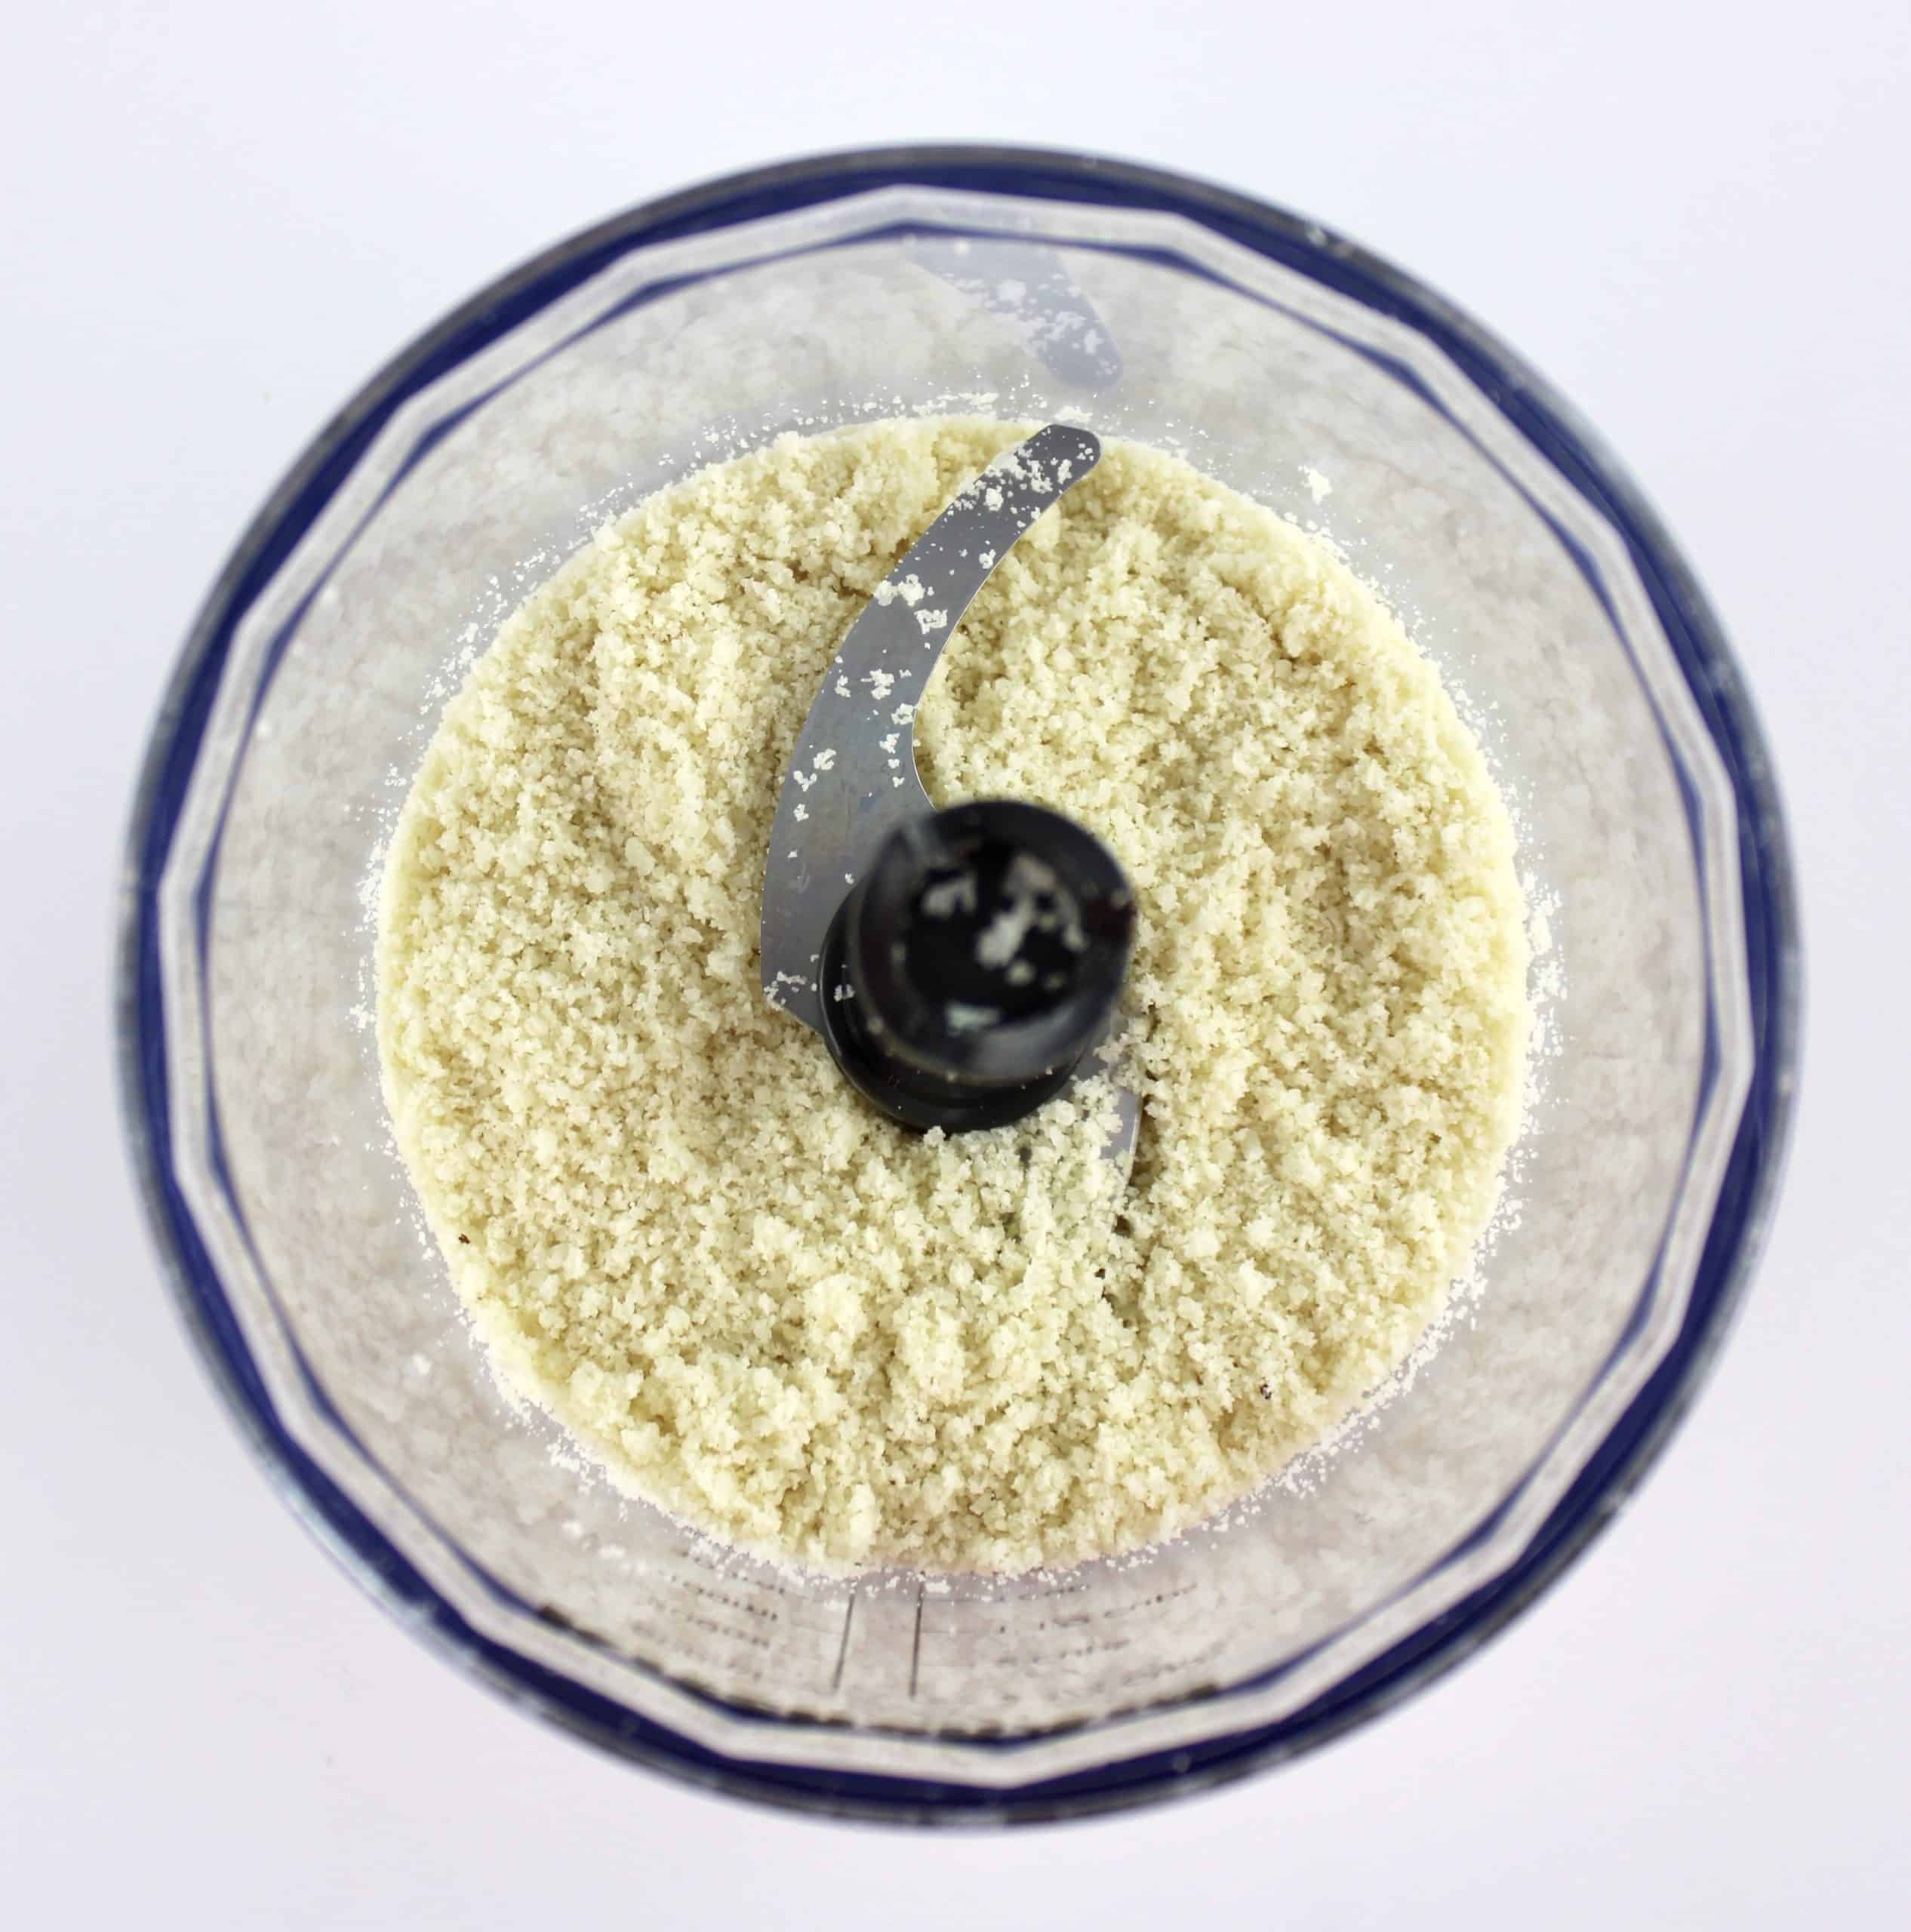 almond flour and parmesan cheese ground in mini chopper bowl